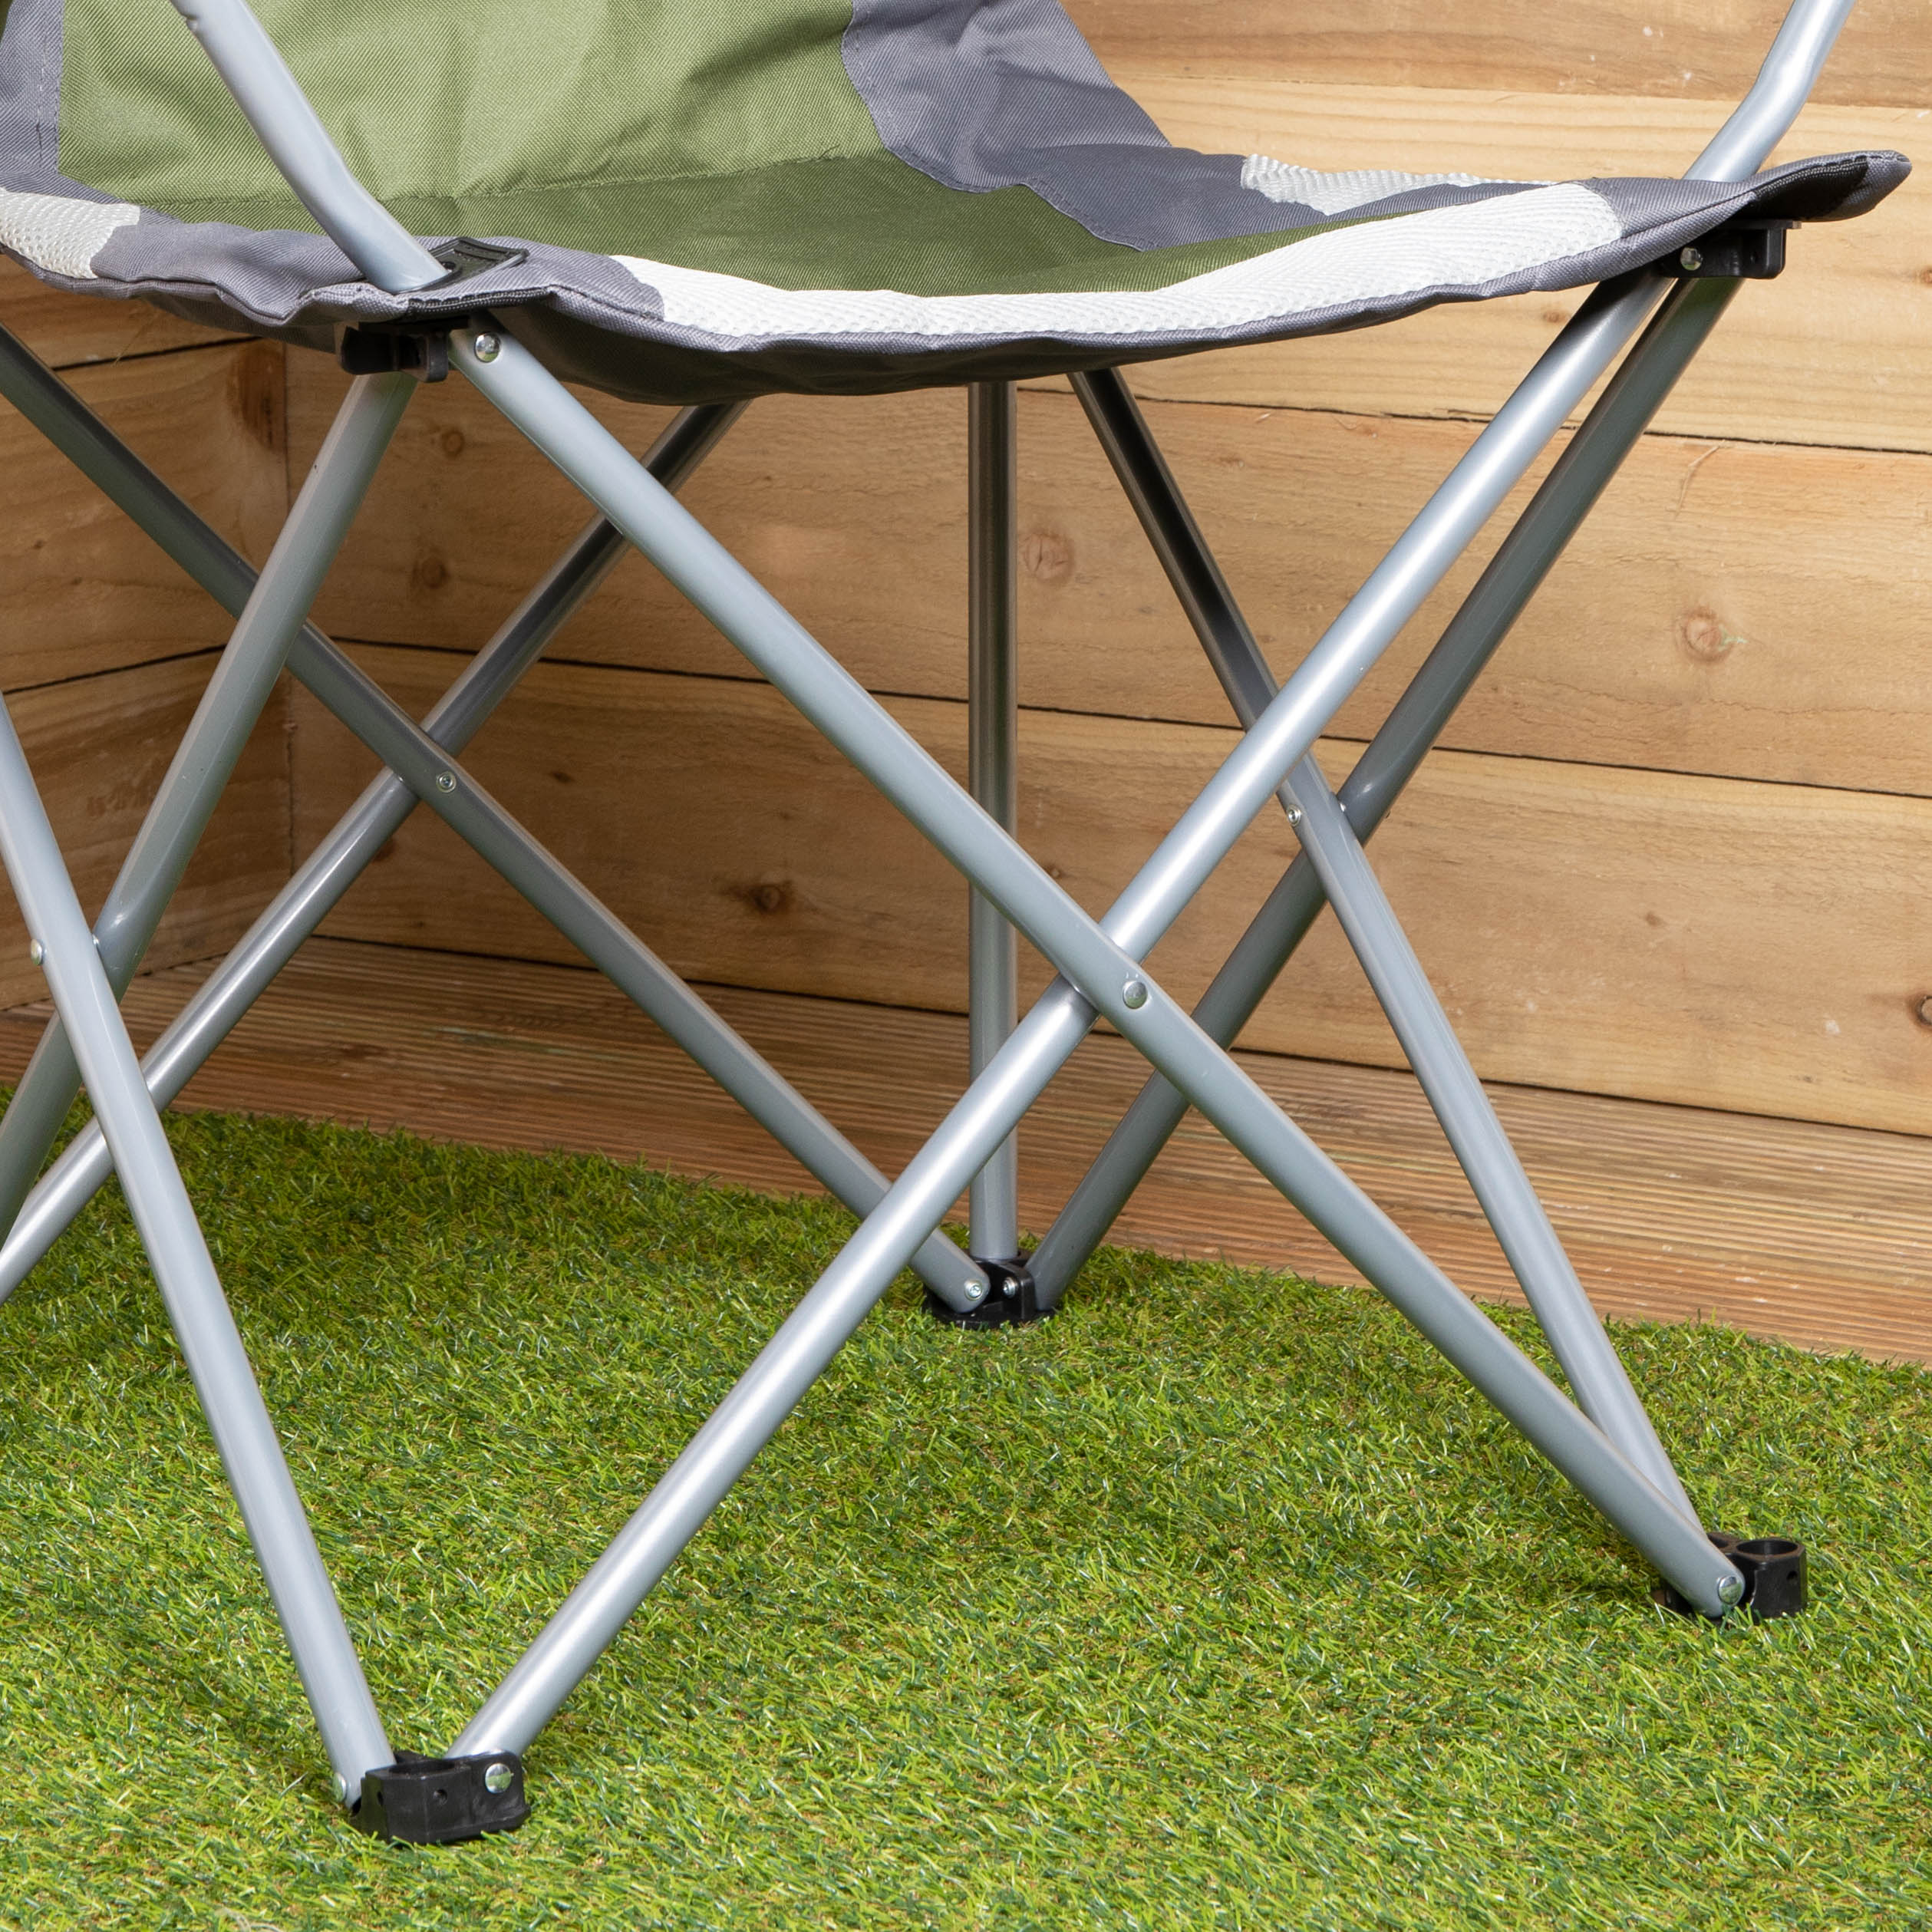 Berkley Folding Lightweight Padded High Back Relaxer Camping Chair in Forest Green